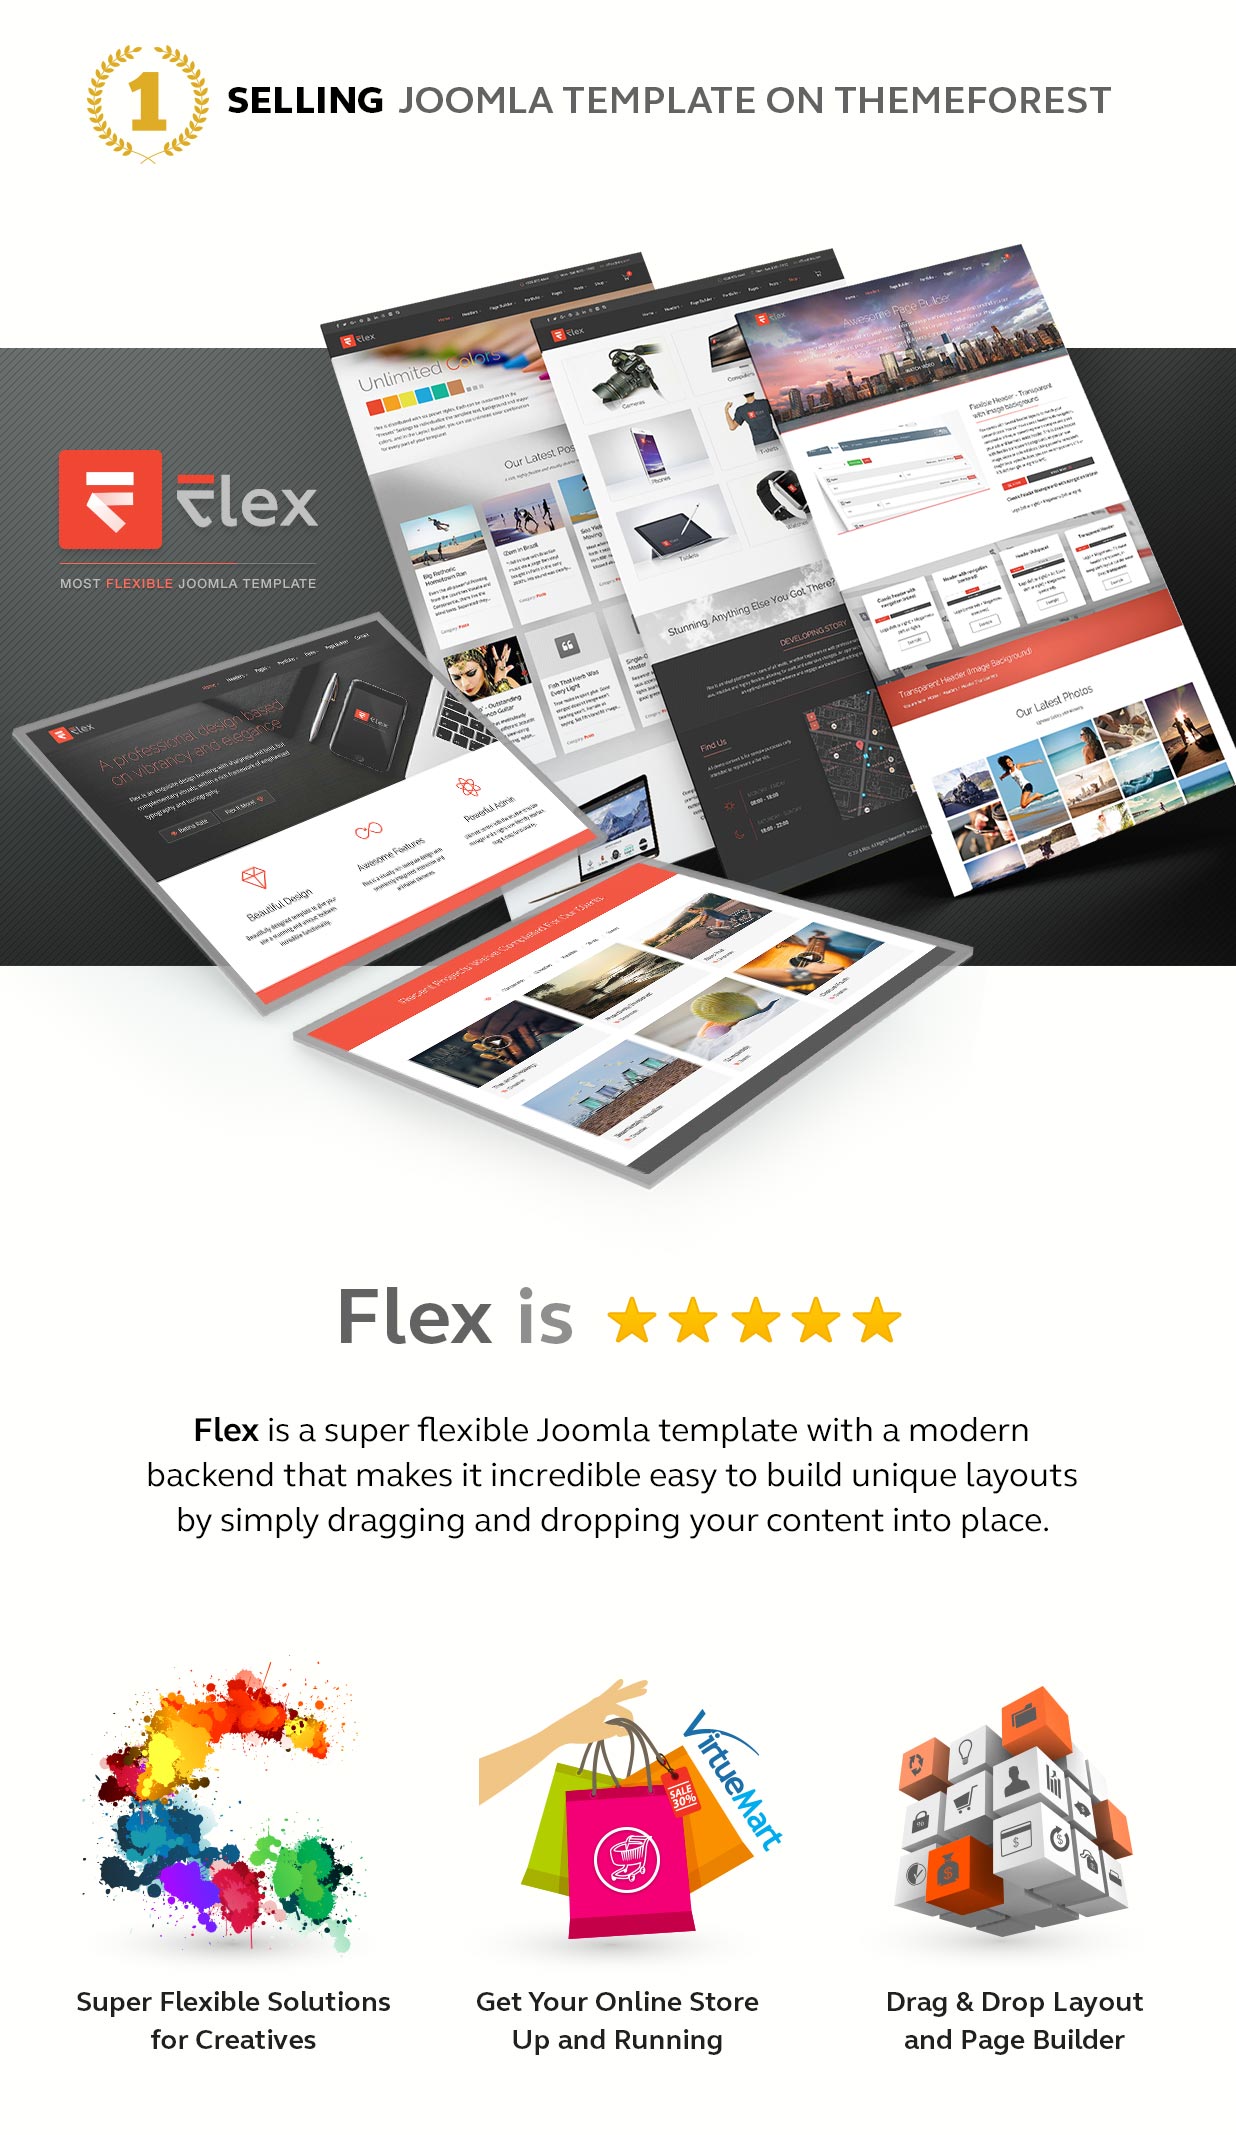 Flex - Multi-Purpose Joomla template - #1 Selling since 2016